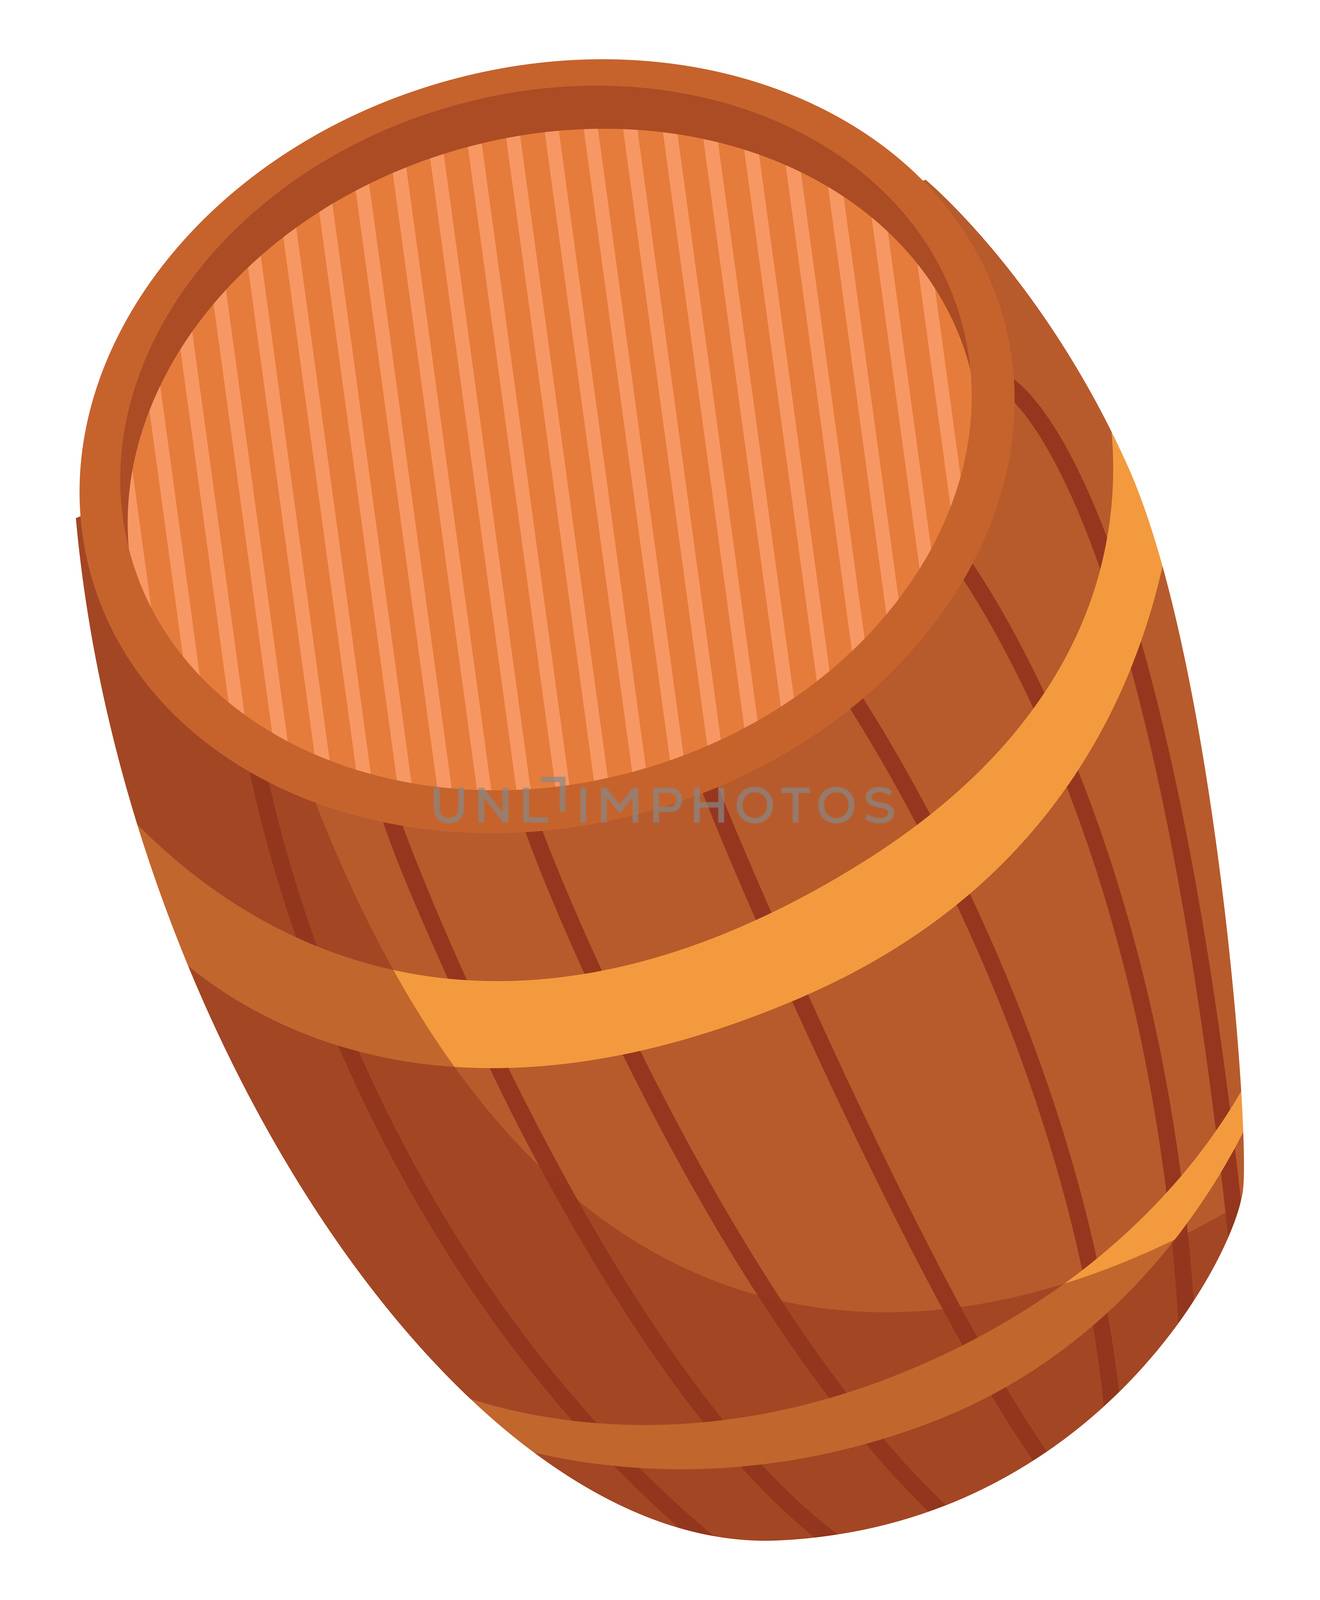 Wooden barrel, illustration, vector on white background